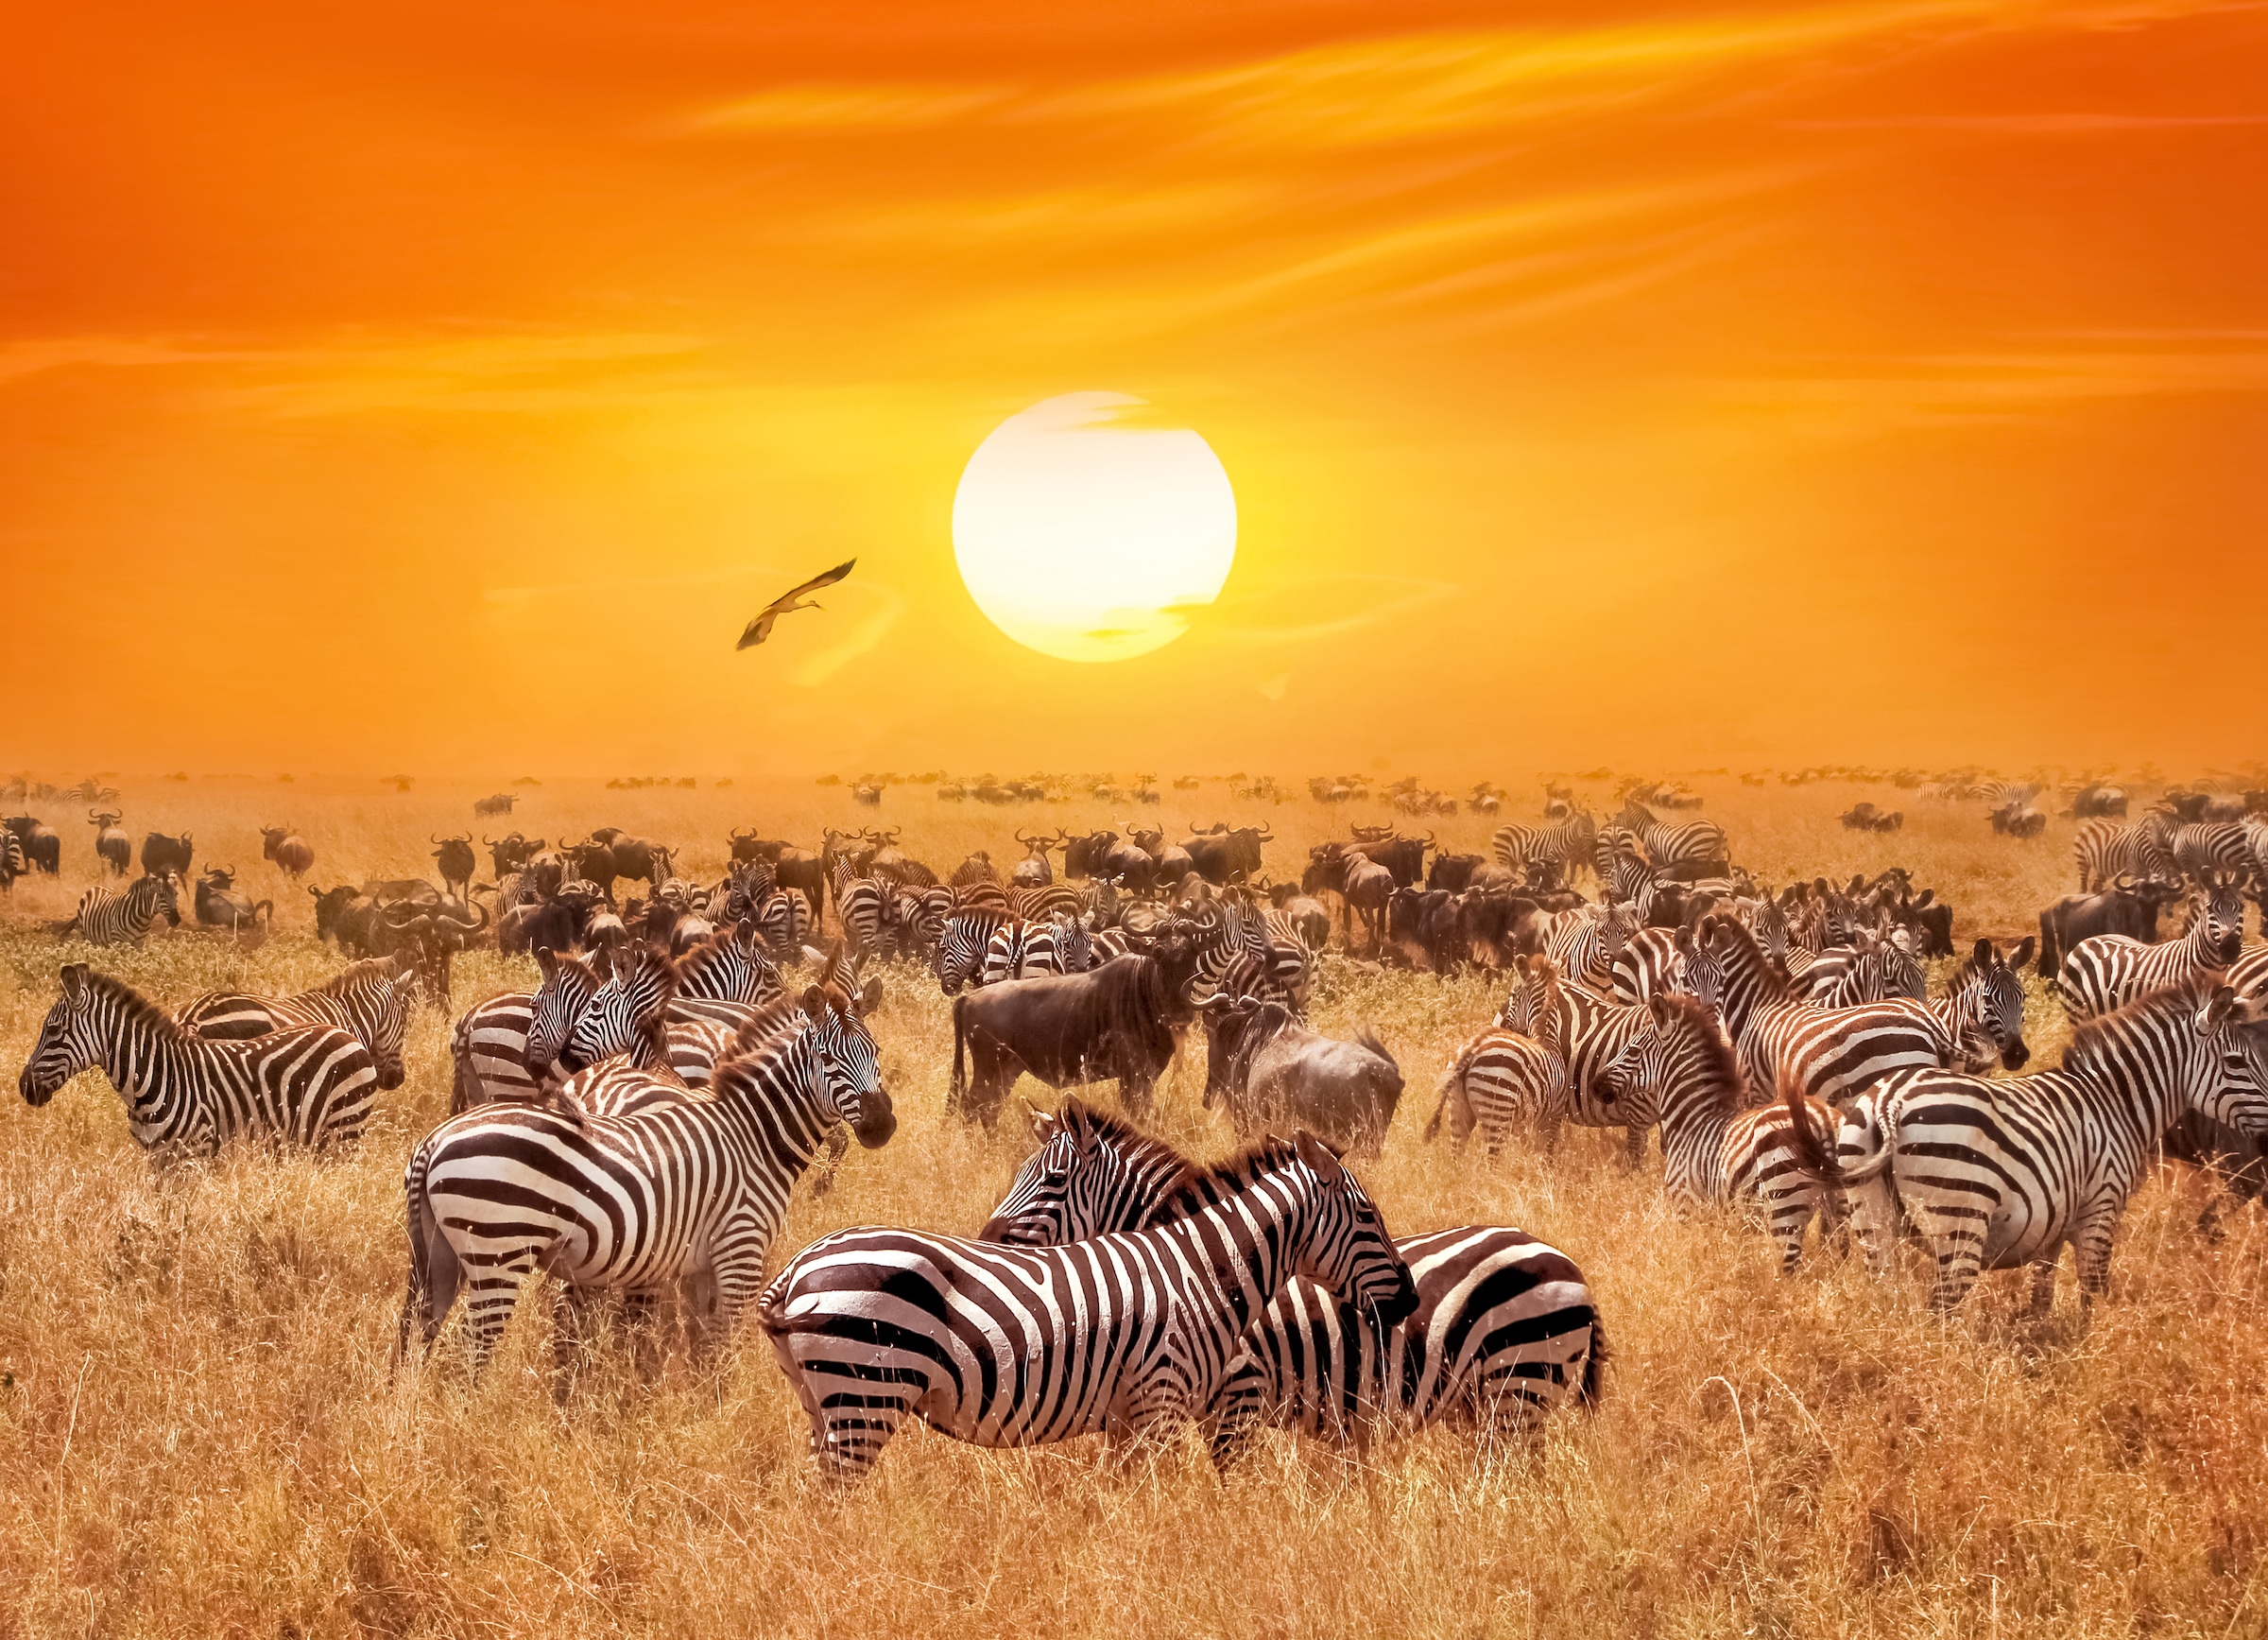 Fototapete »African Antelopes and Zebras«